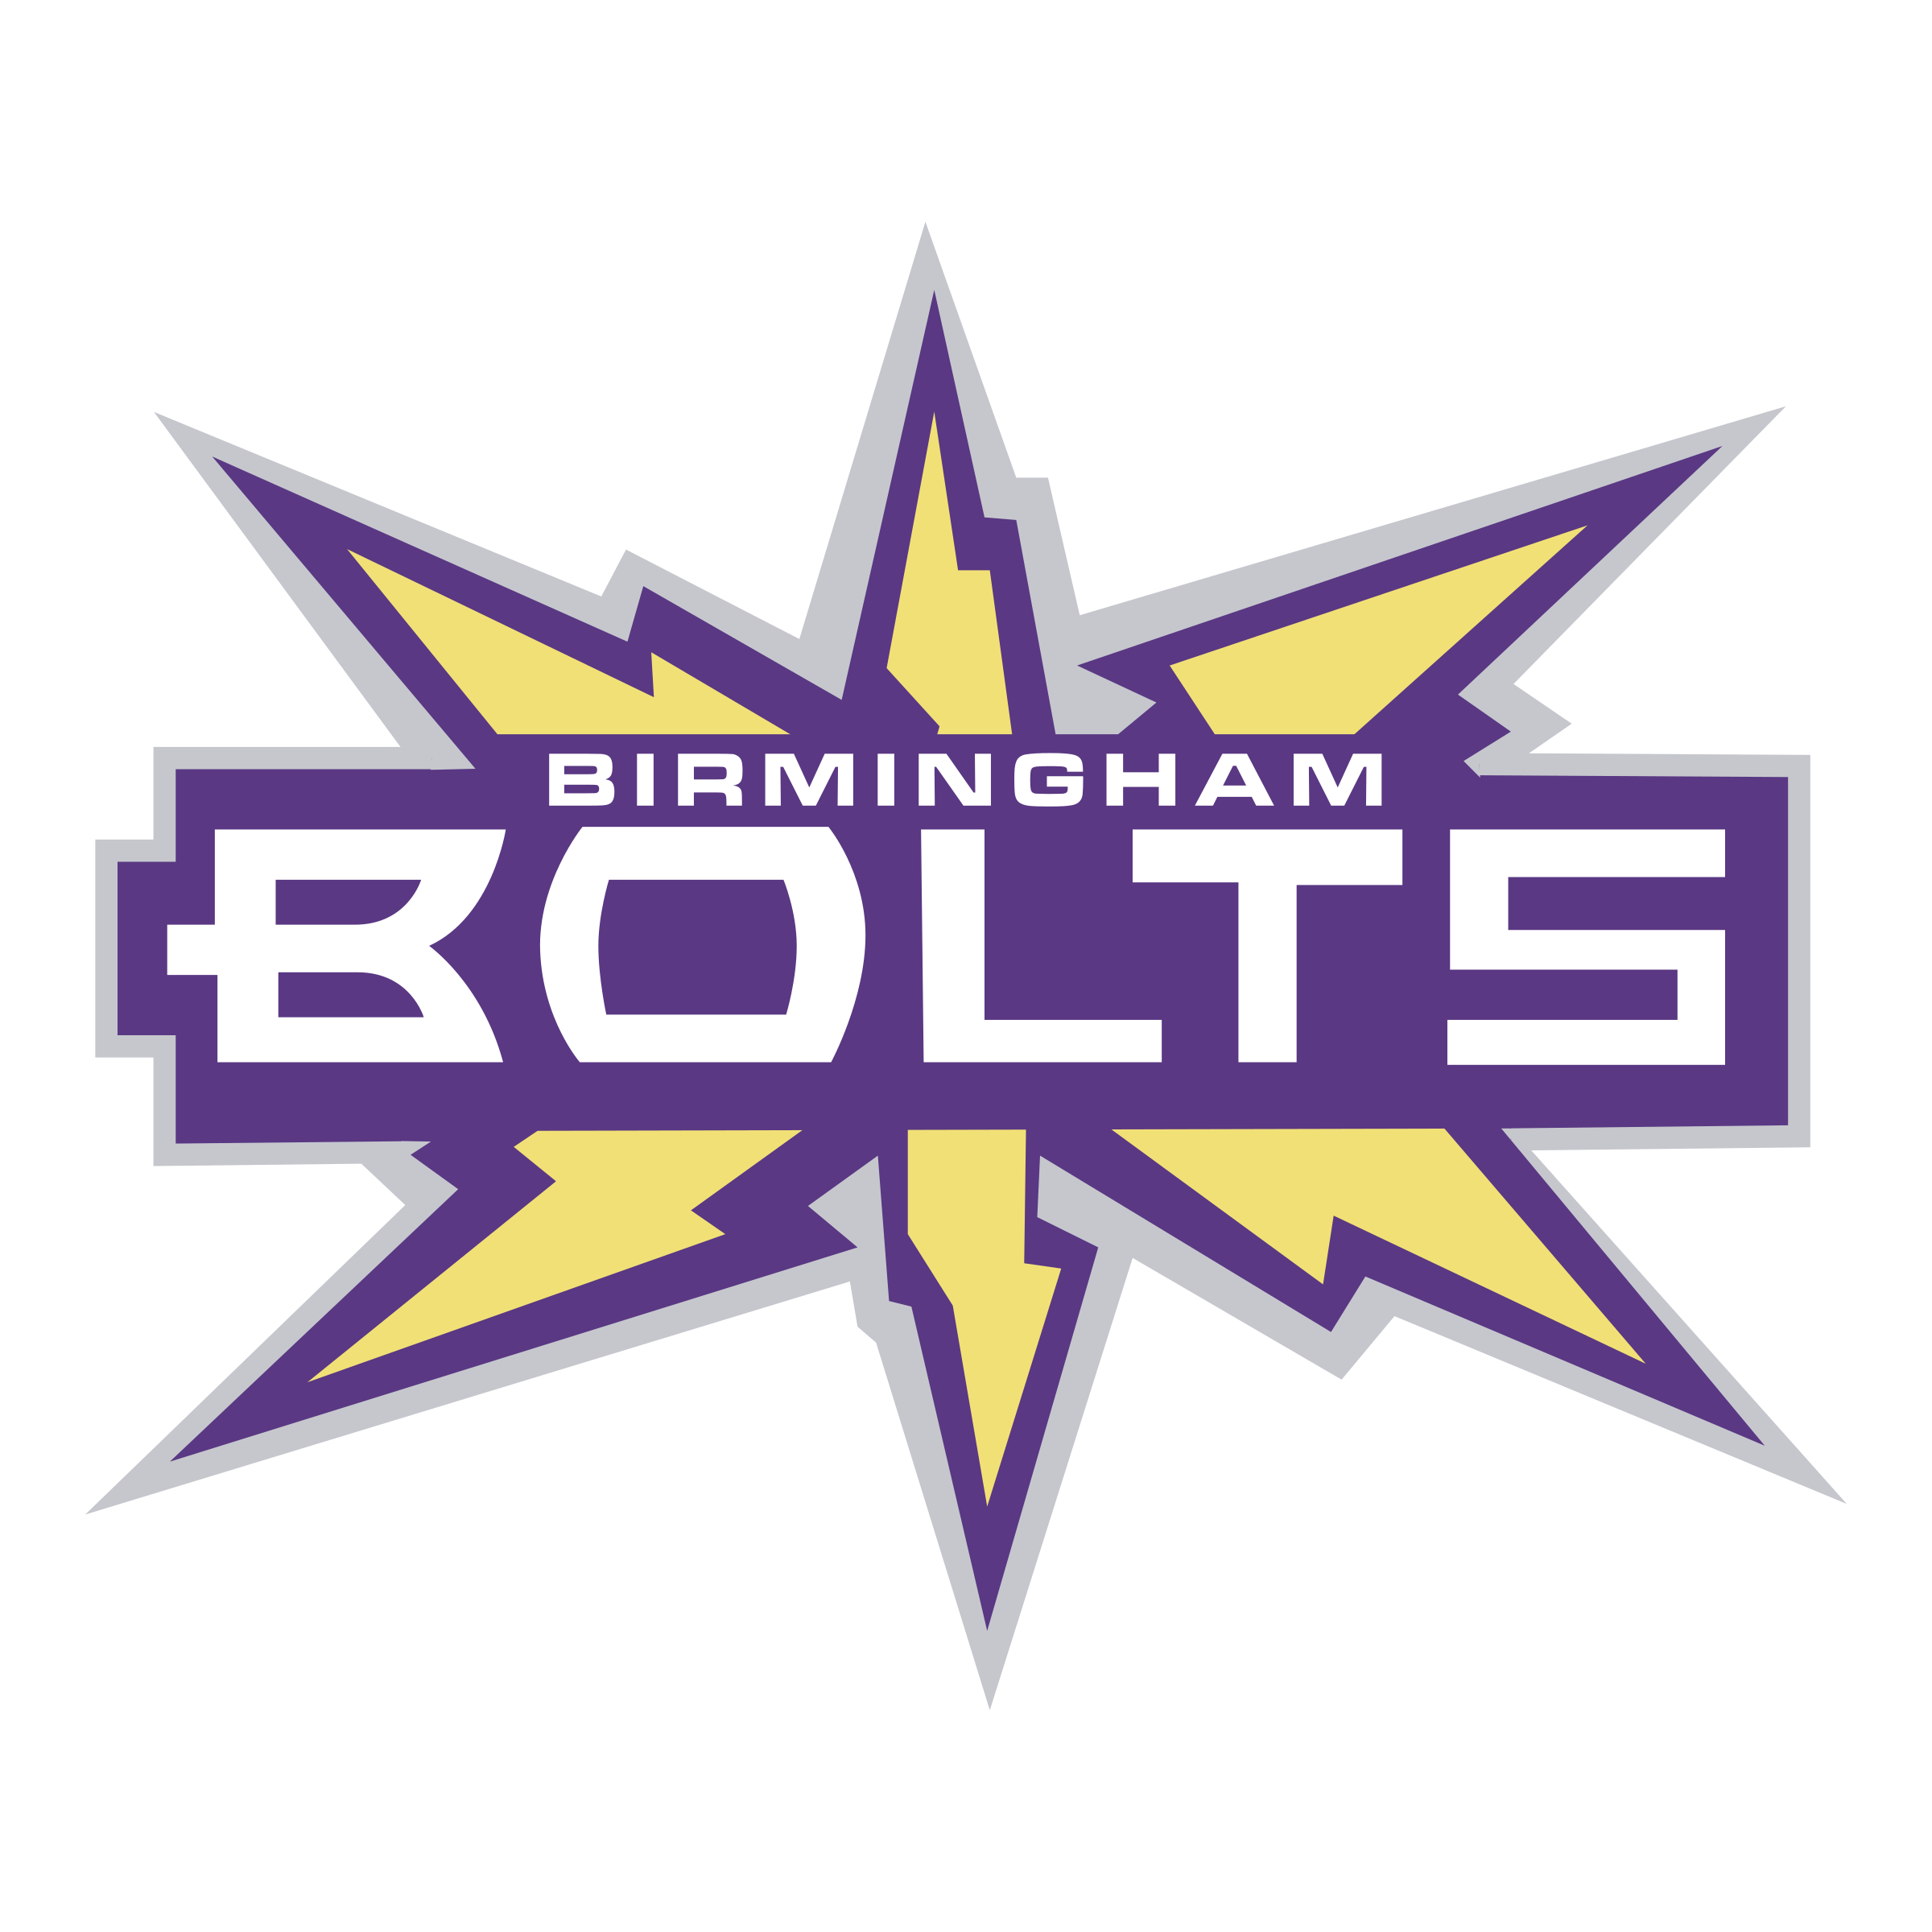 Bolts Logo - Birmingham Bolts Logo PNG Transparent & SVG Vector - Freebie Supply